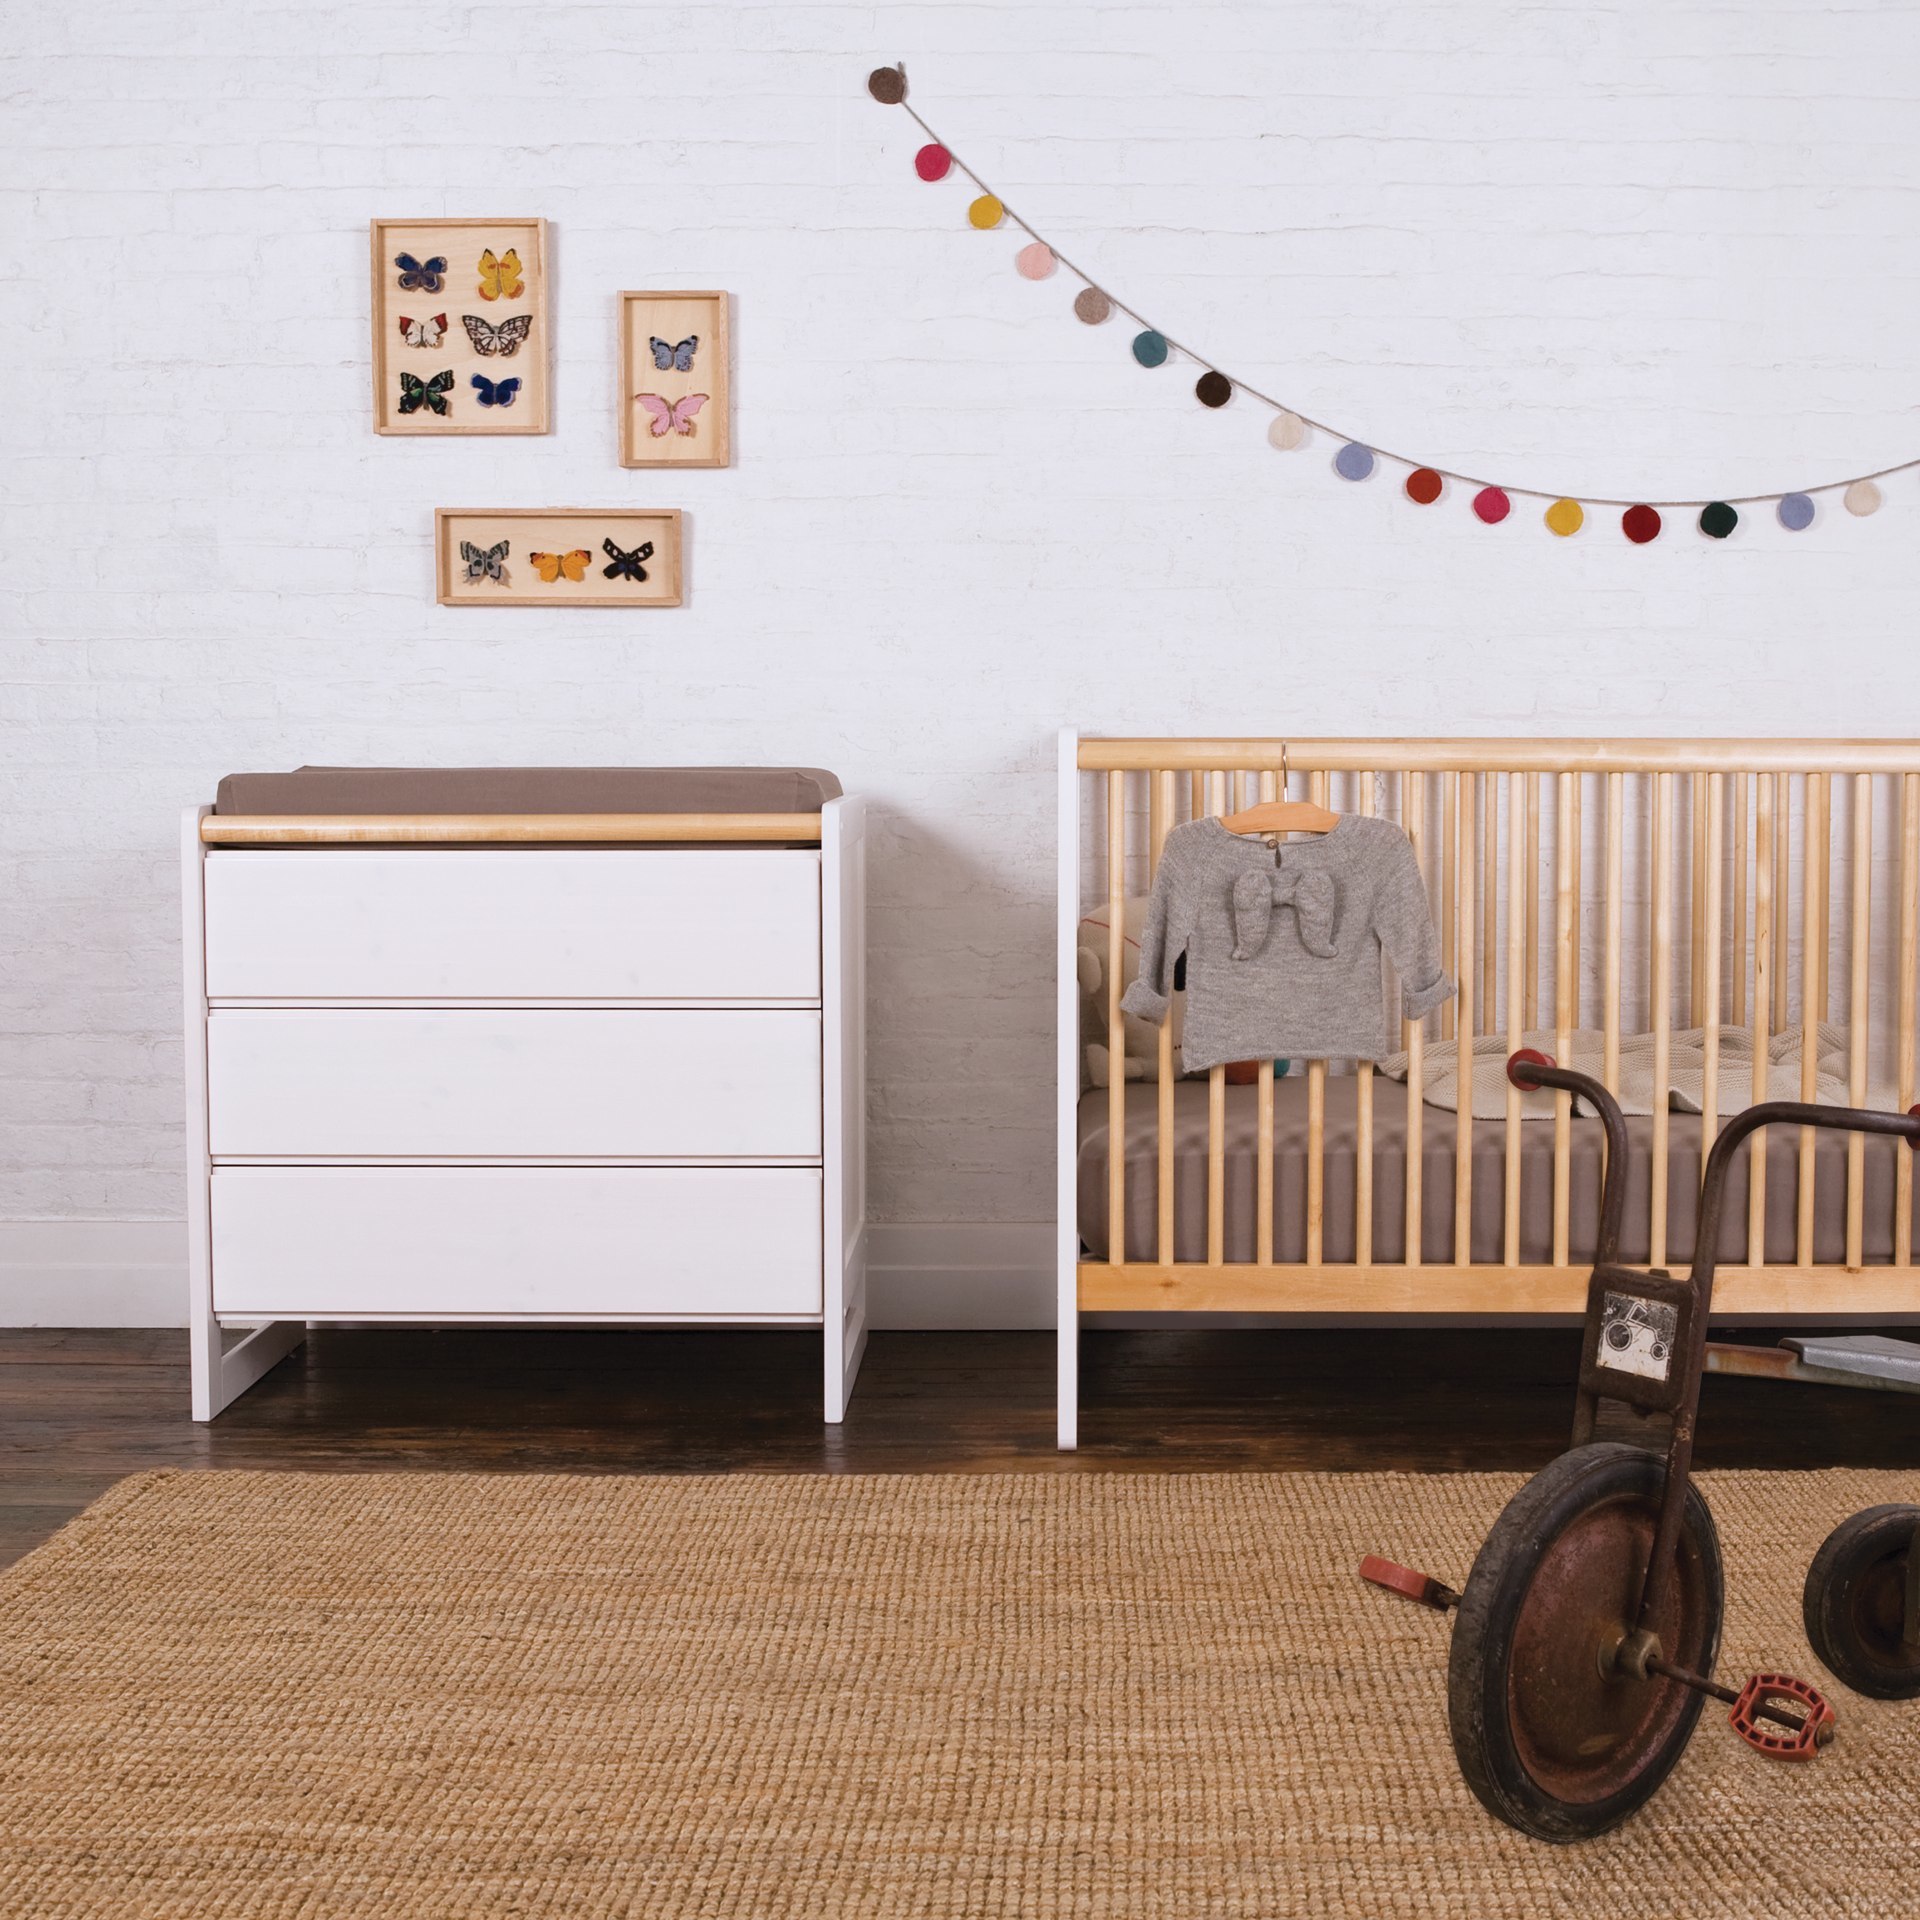 Baby Nursery Furniture